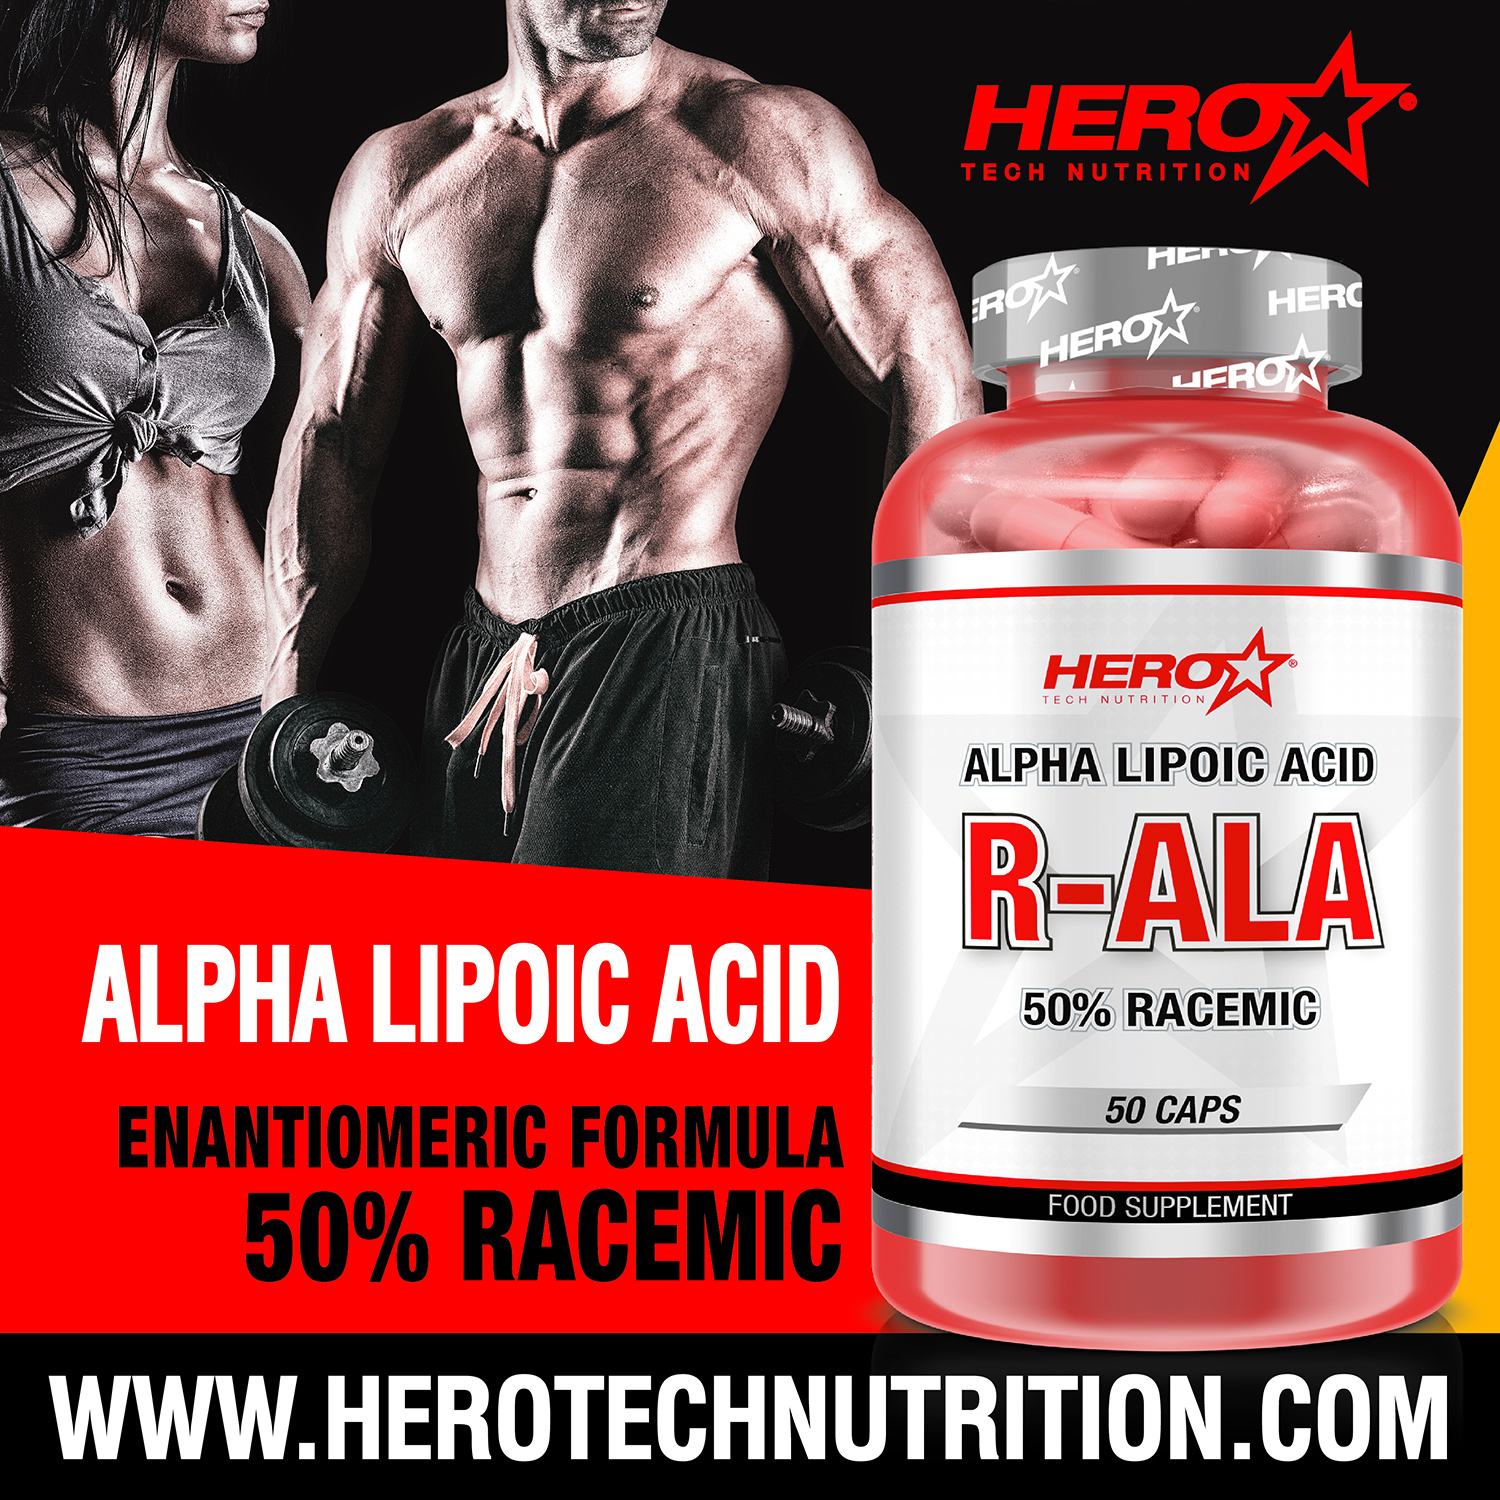 R-ALA ALPHA LIPOIC ACID HERO TECH NUTRITION herotechnutrition